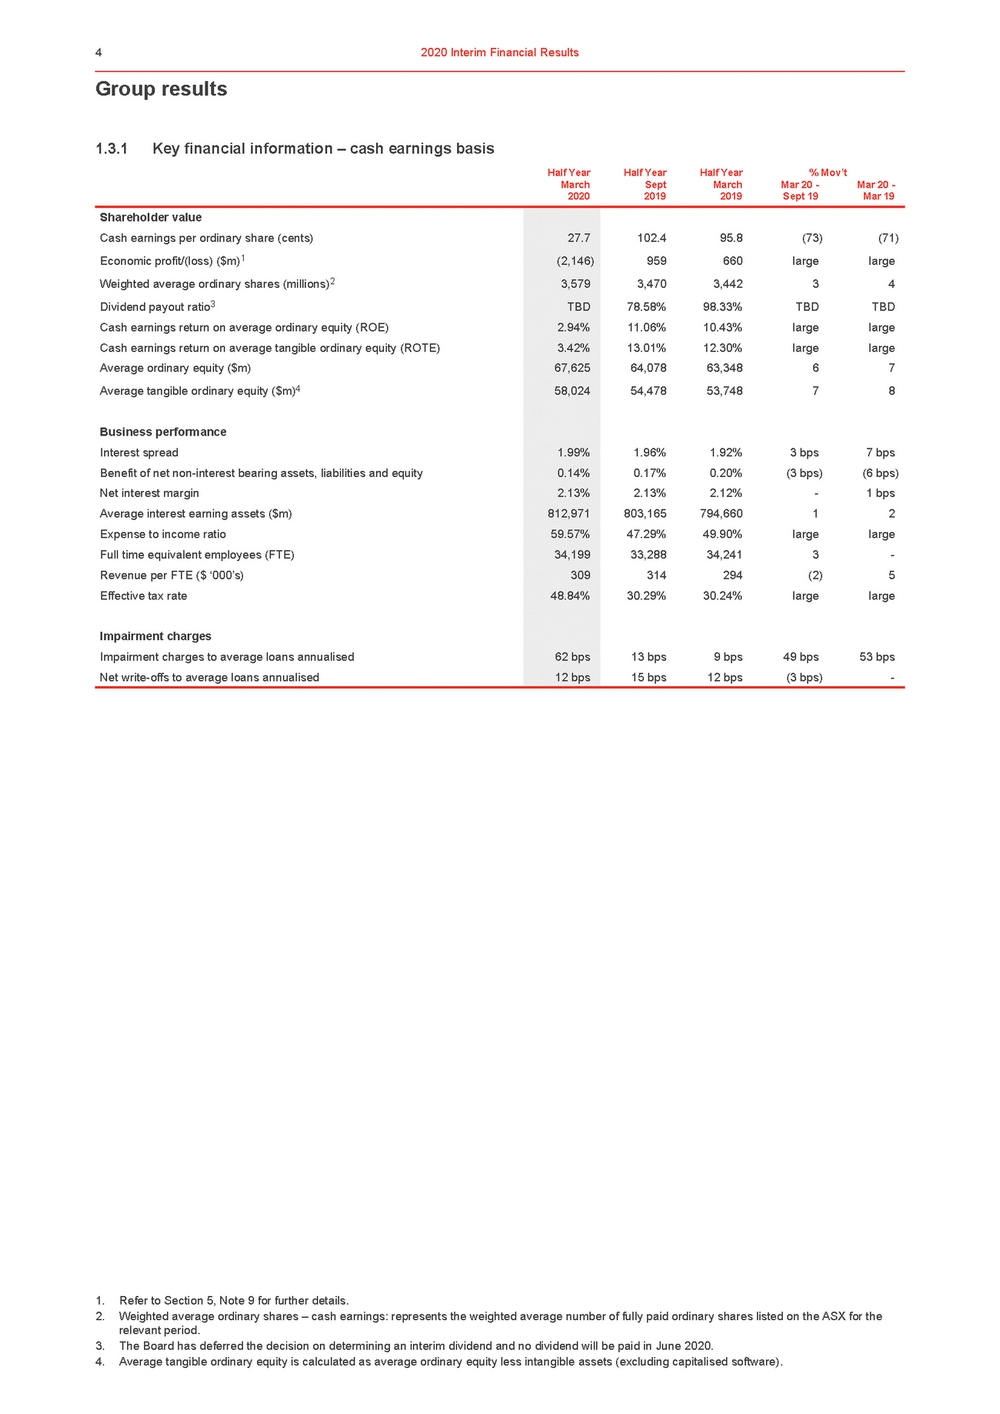 11676-3-ex1_westpac 2020 interim financial results announcement_page_009.jpg